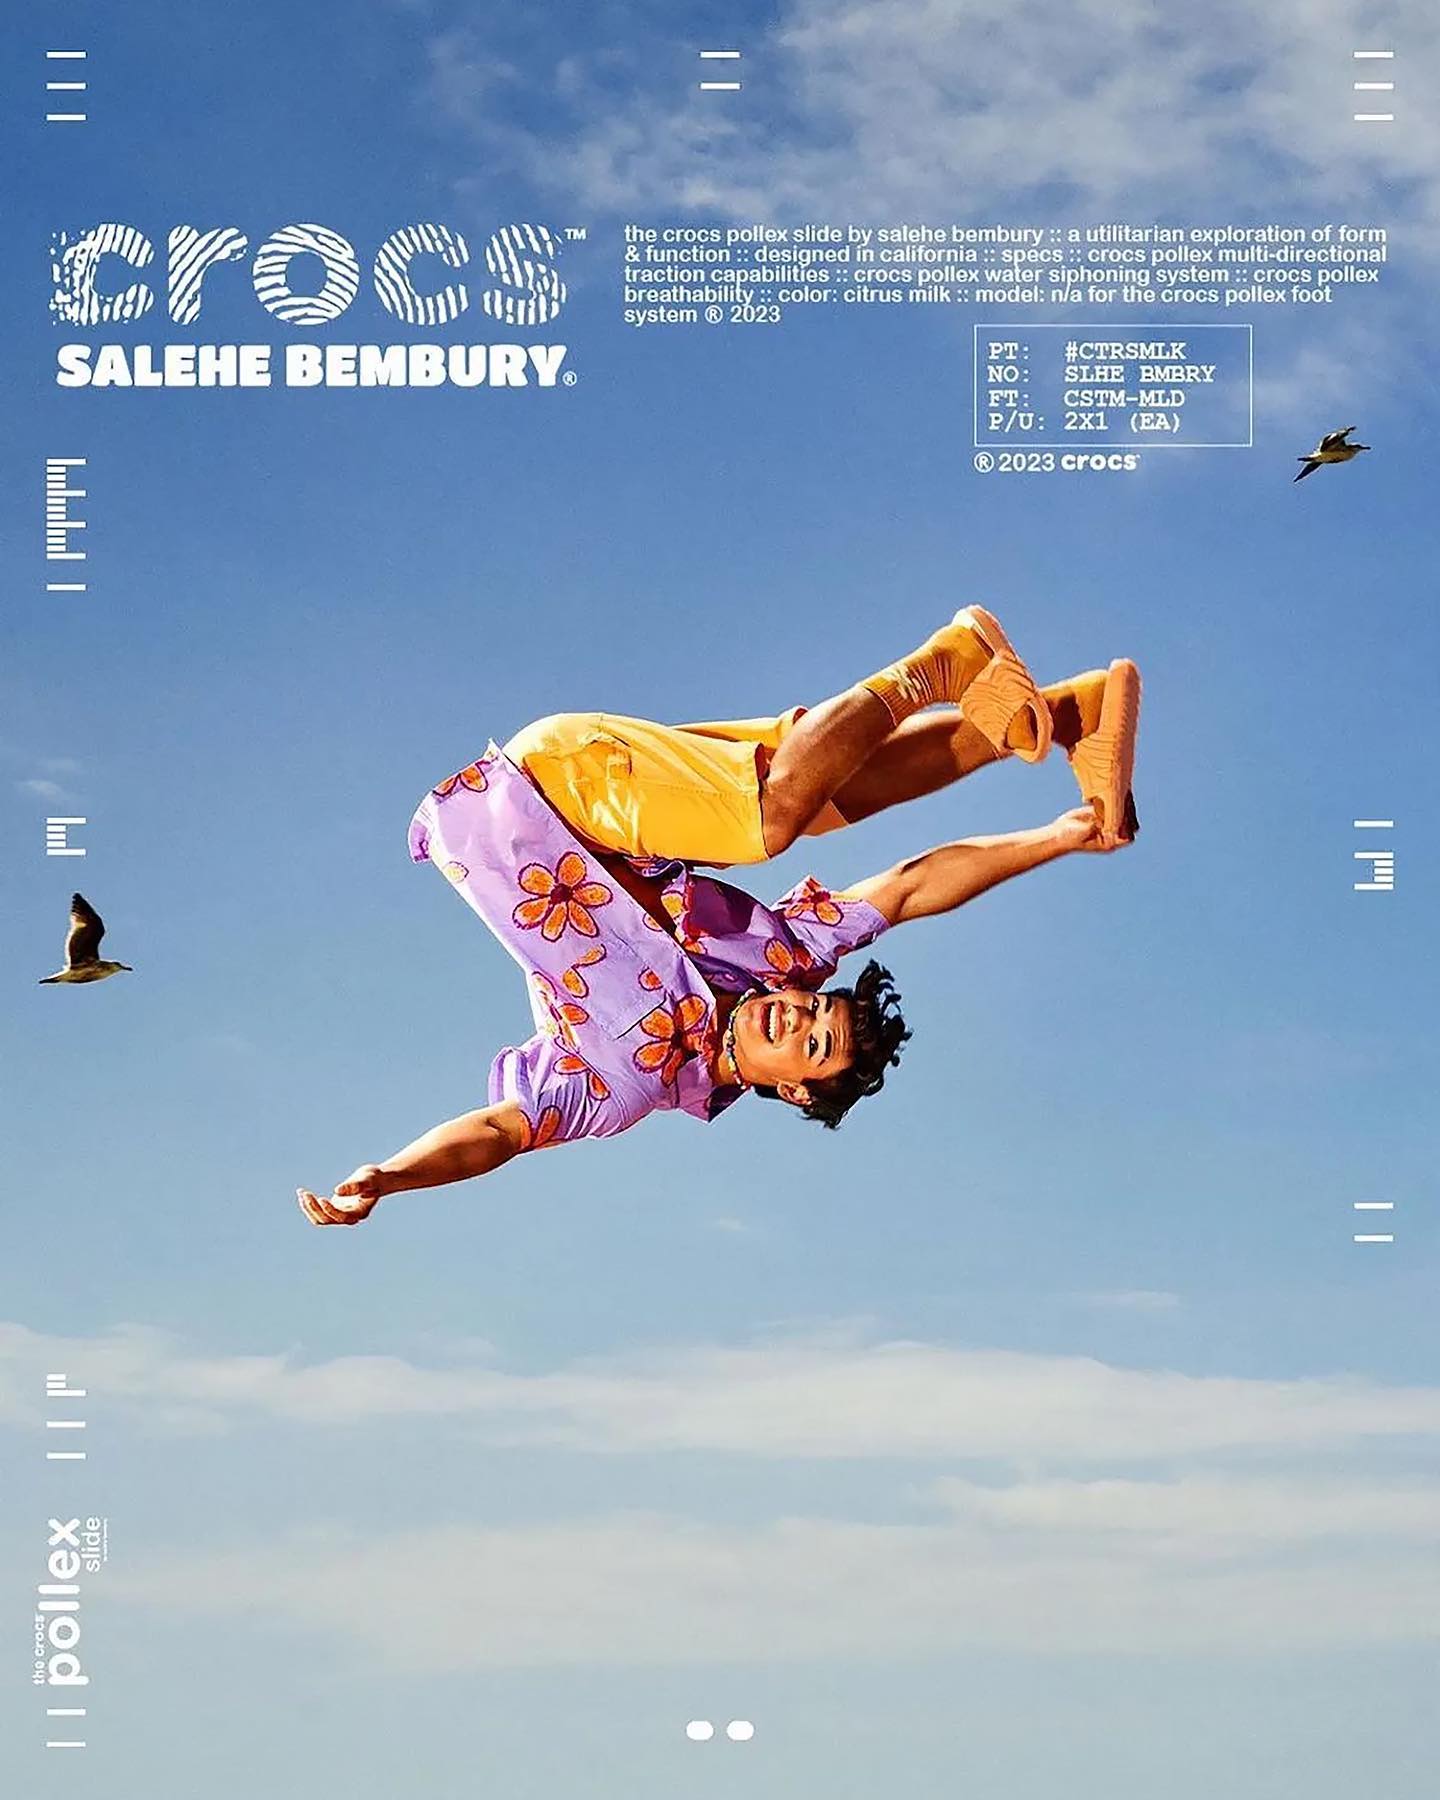 David LaChapelle | Advertising | Crocs by Salehe Bembury  | 2